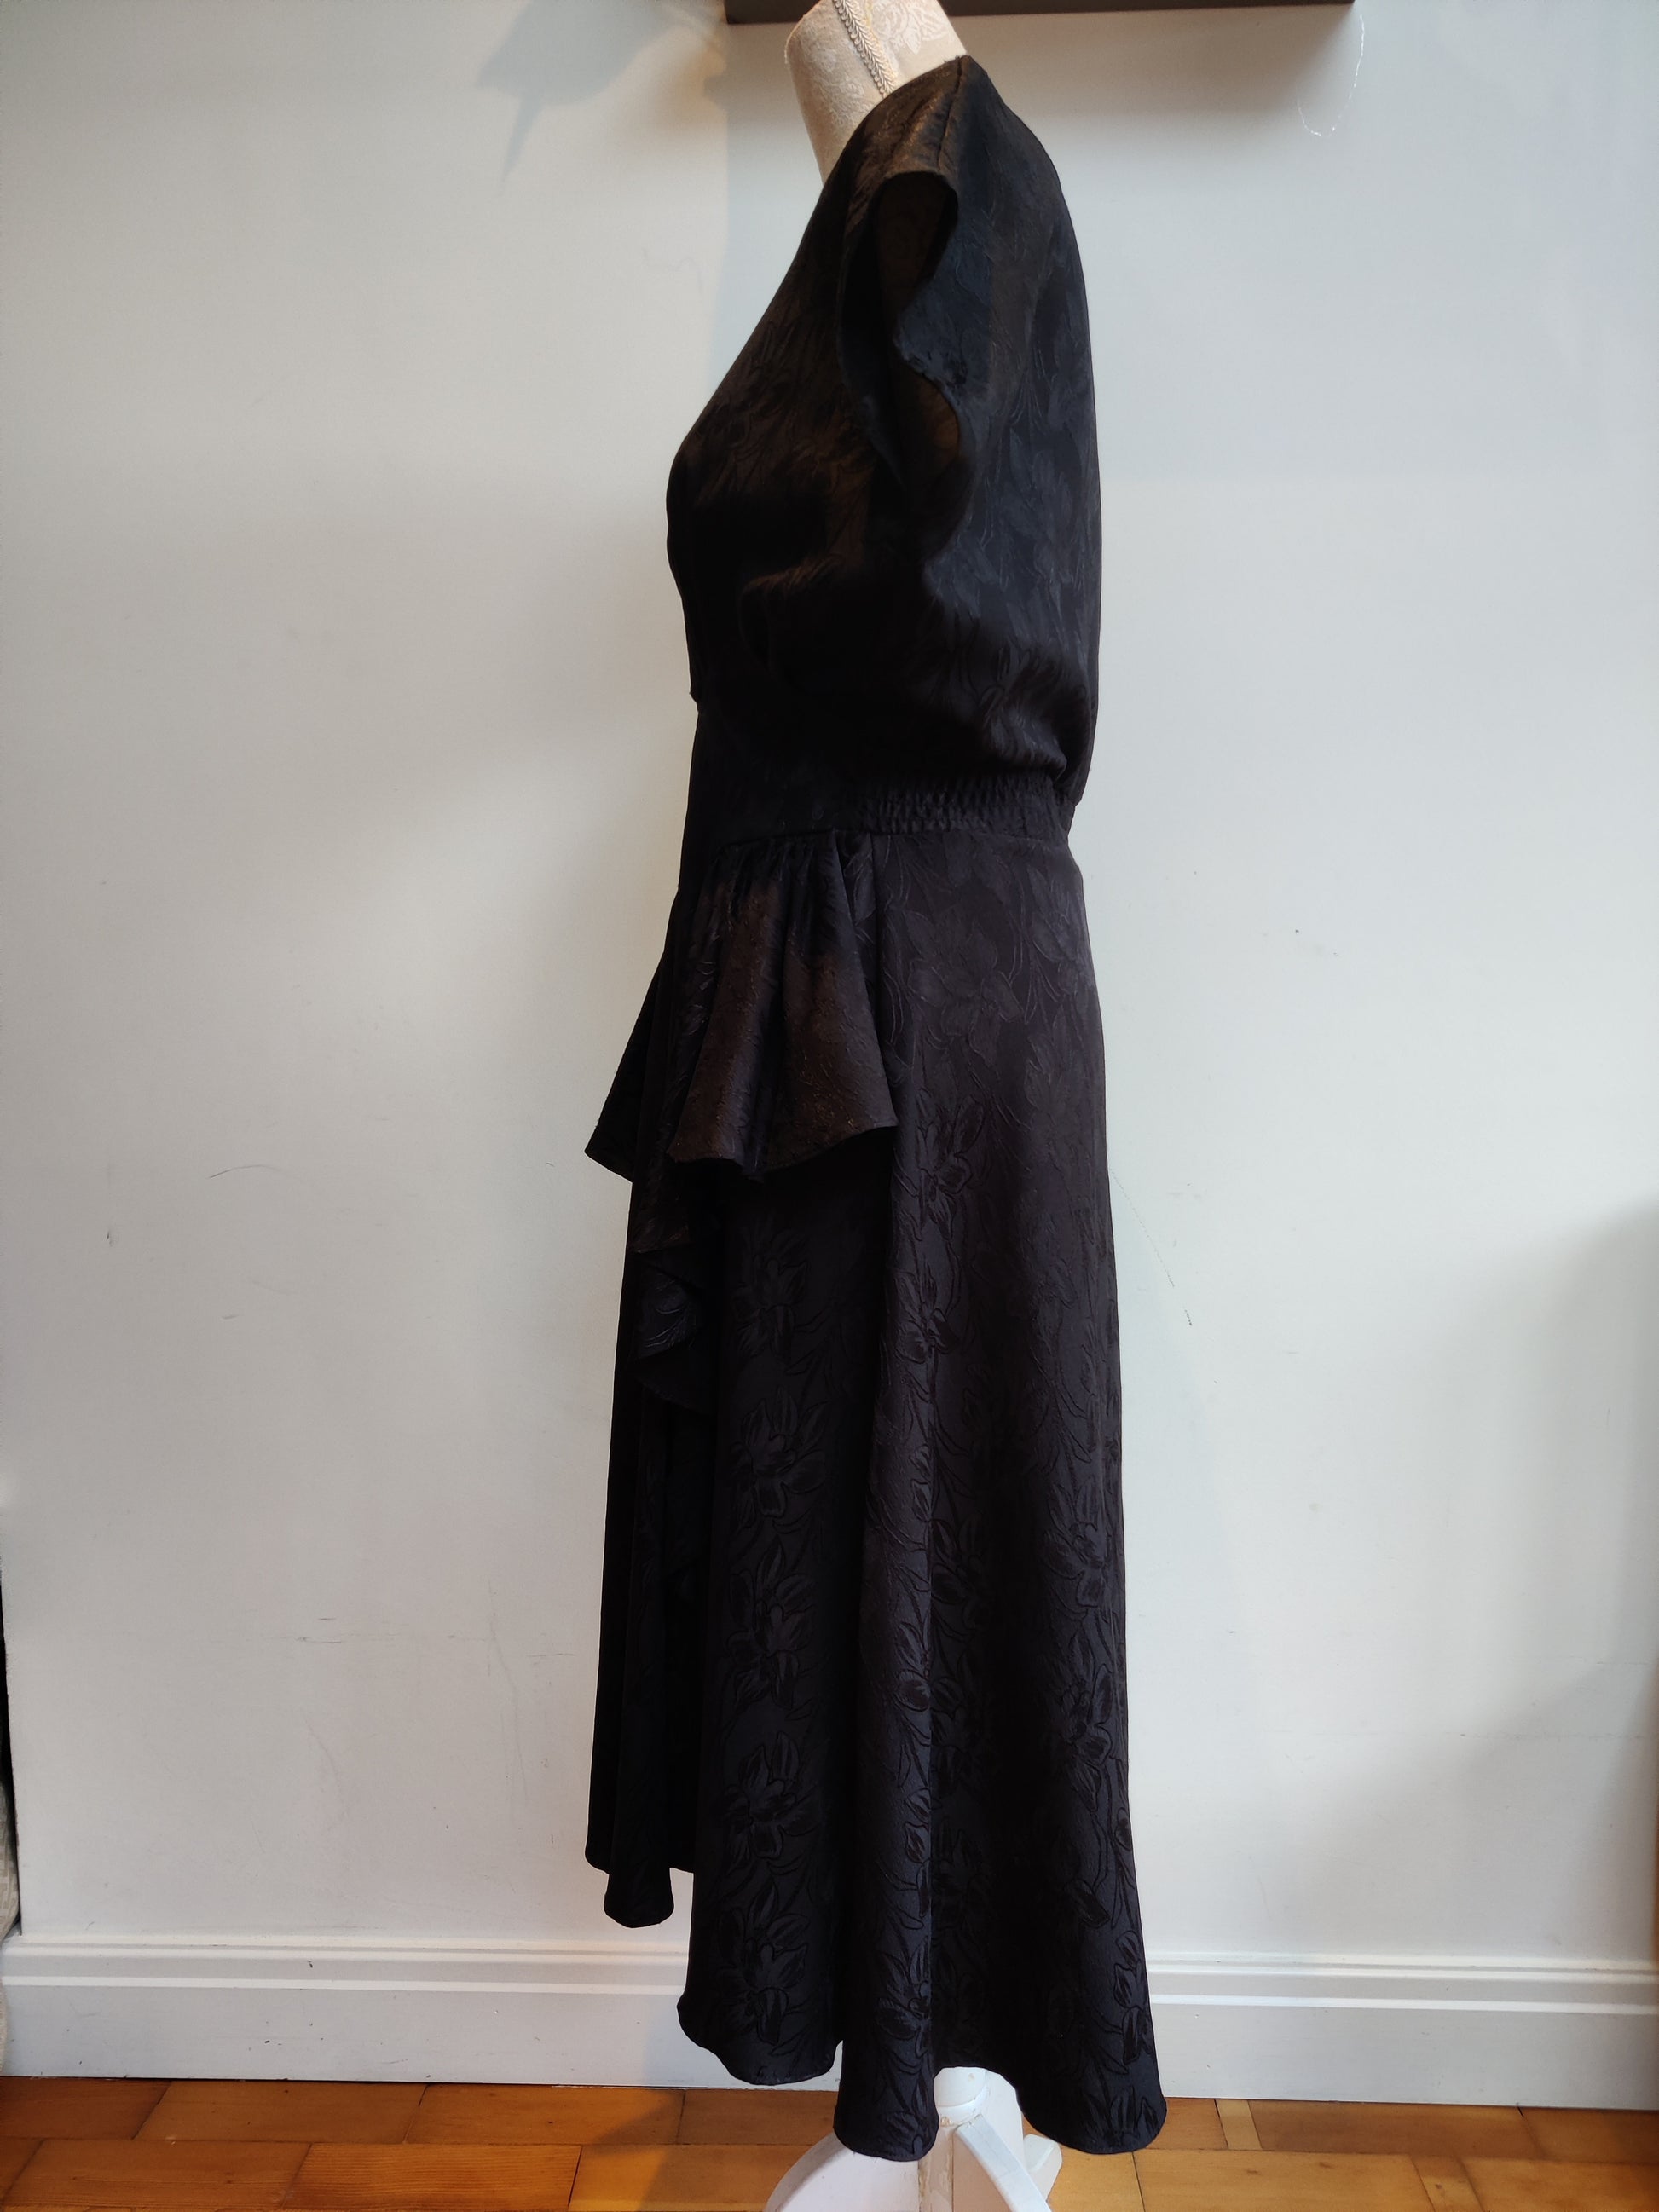 Black 80s dress in flattering design